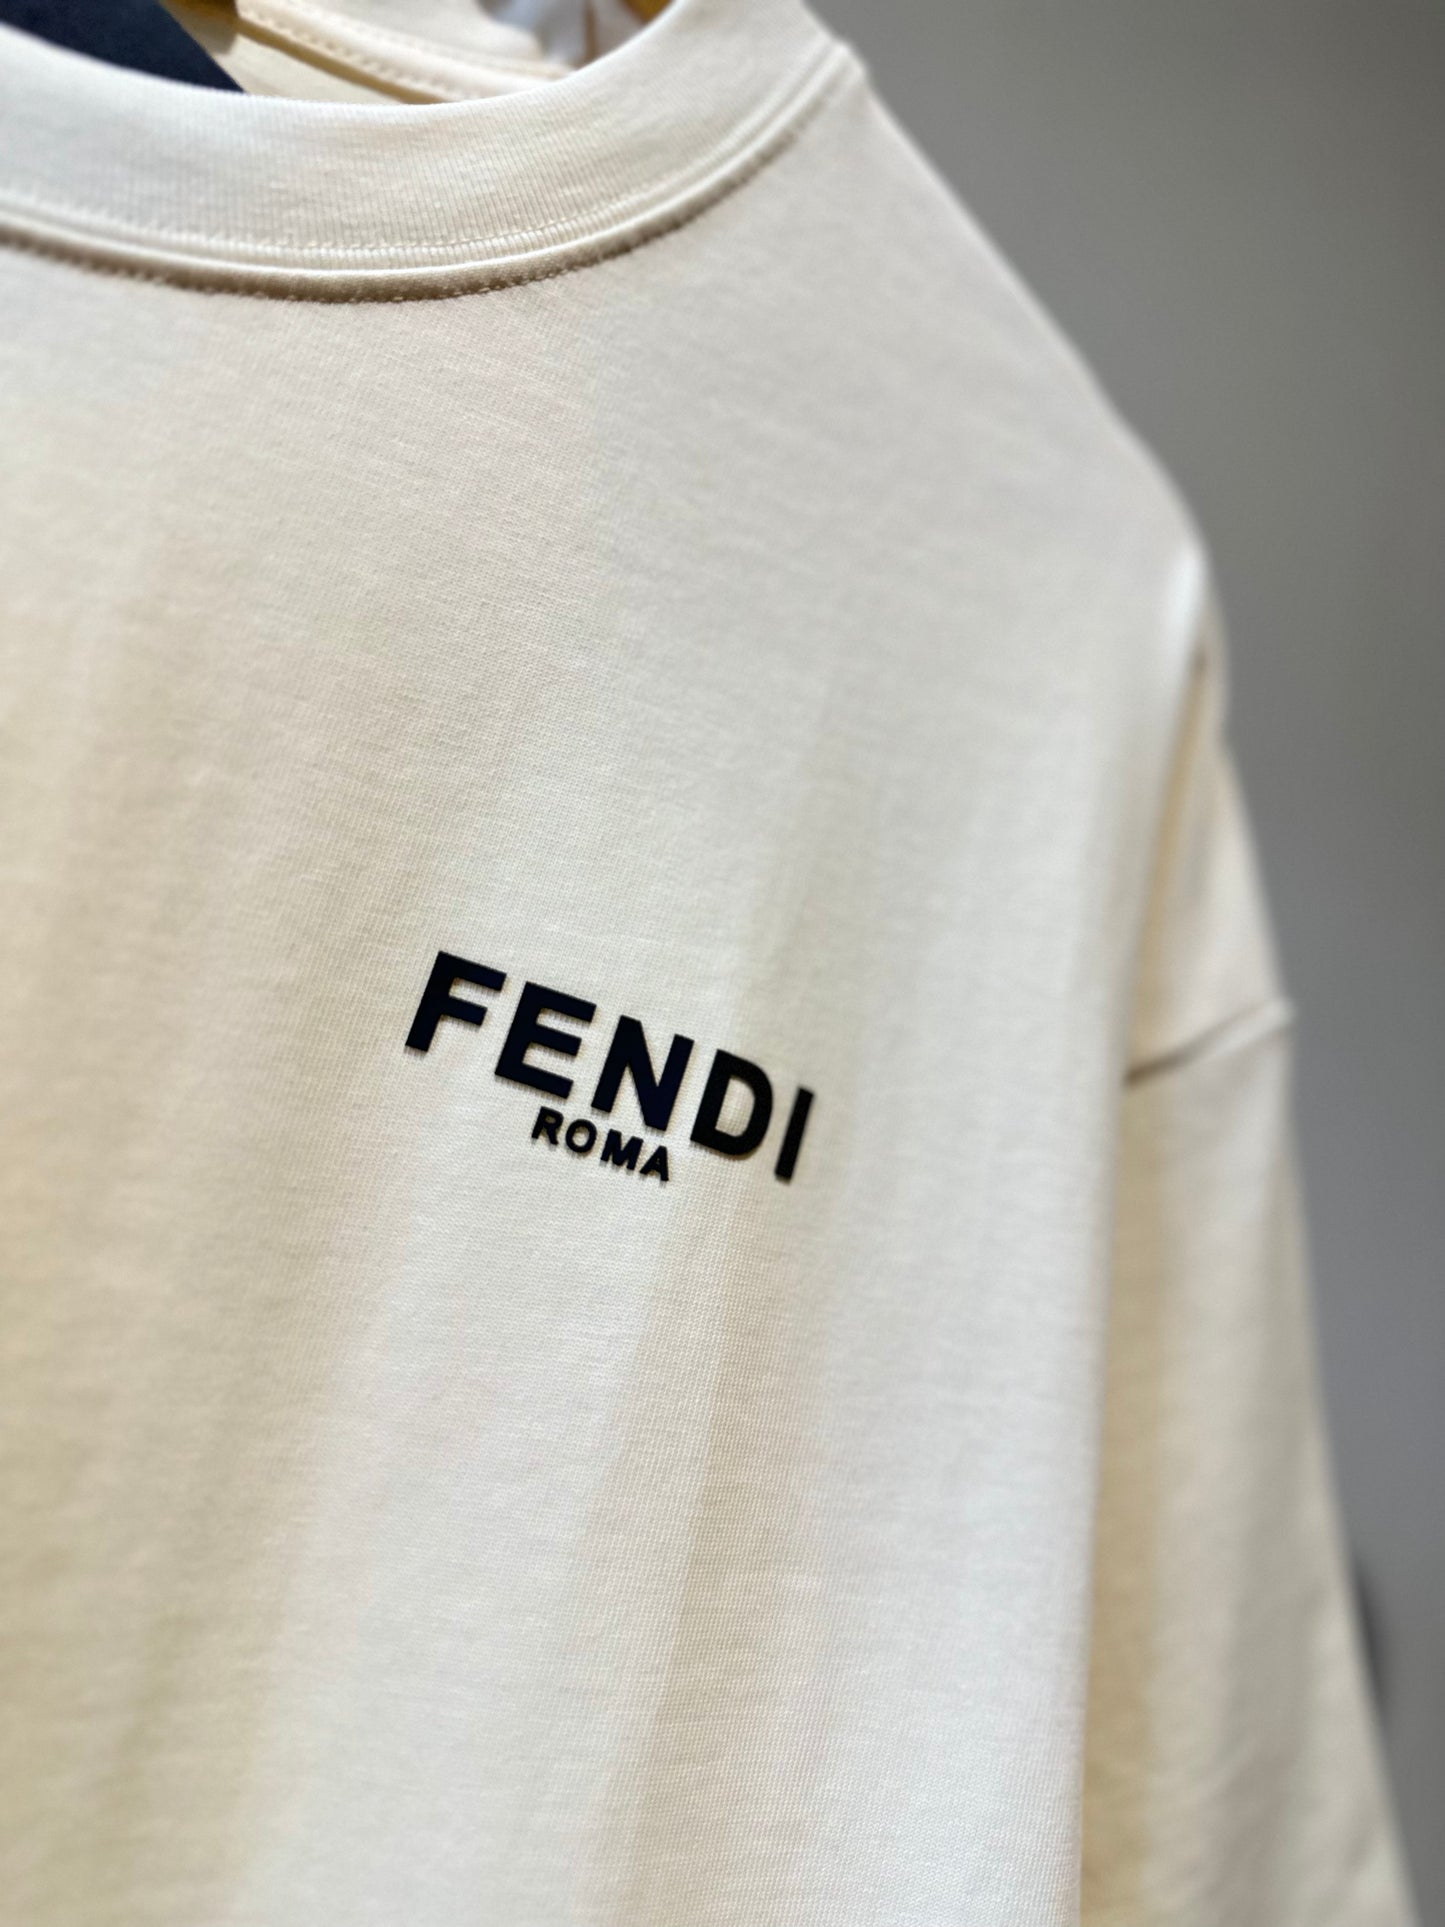 Fendi Roma Cotton T-Shirt (Cream/Apricot)